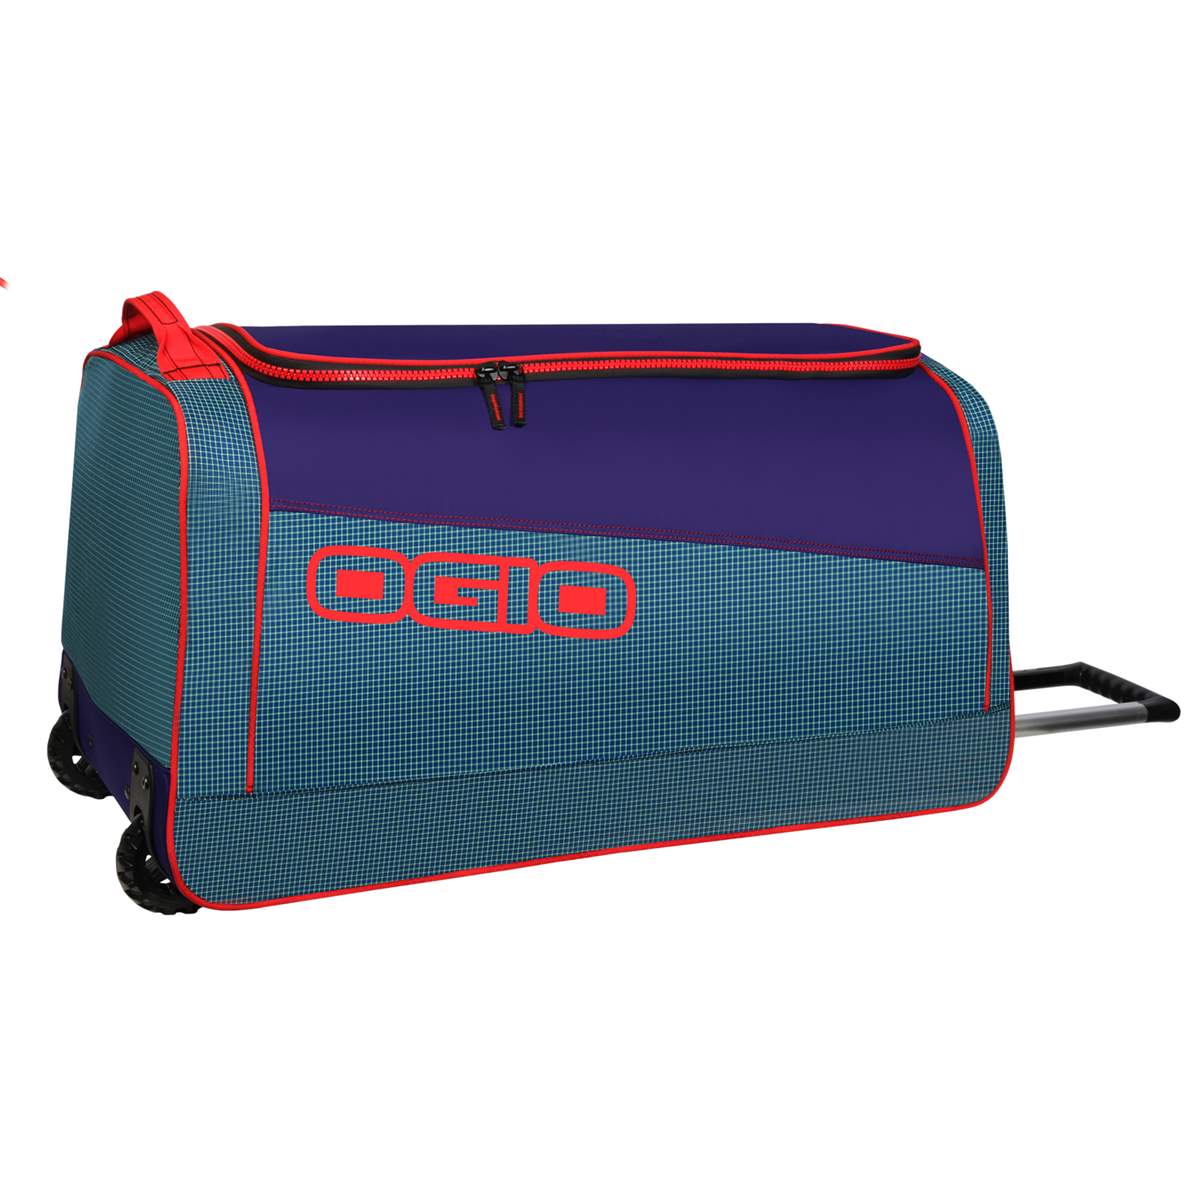 Ogio Travel Bag Spoke Tealio, 119 Liter